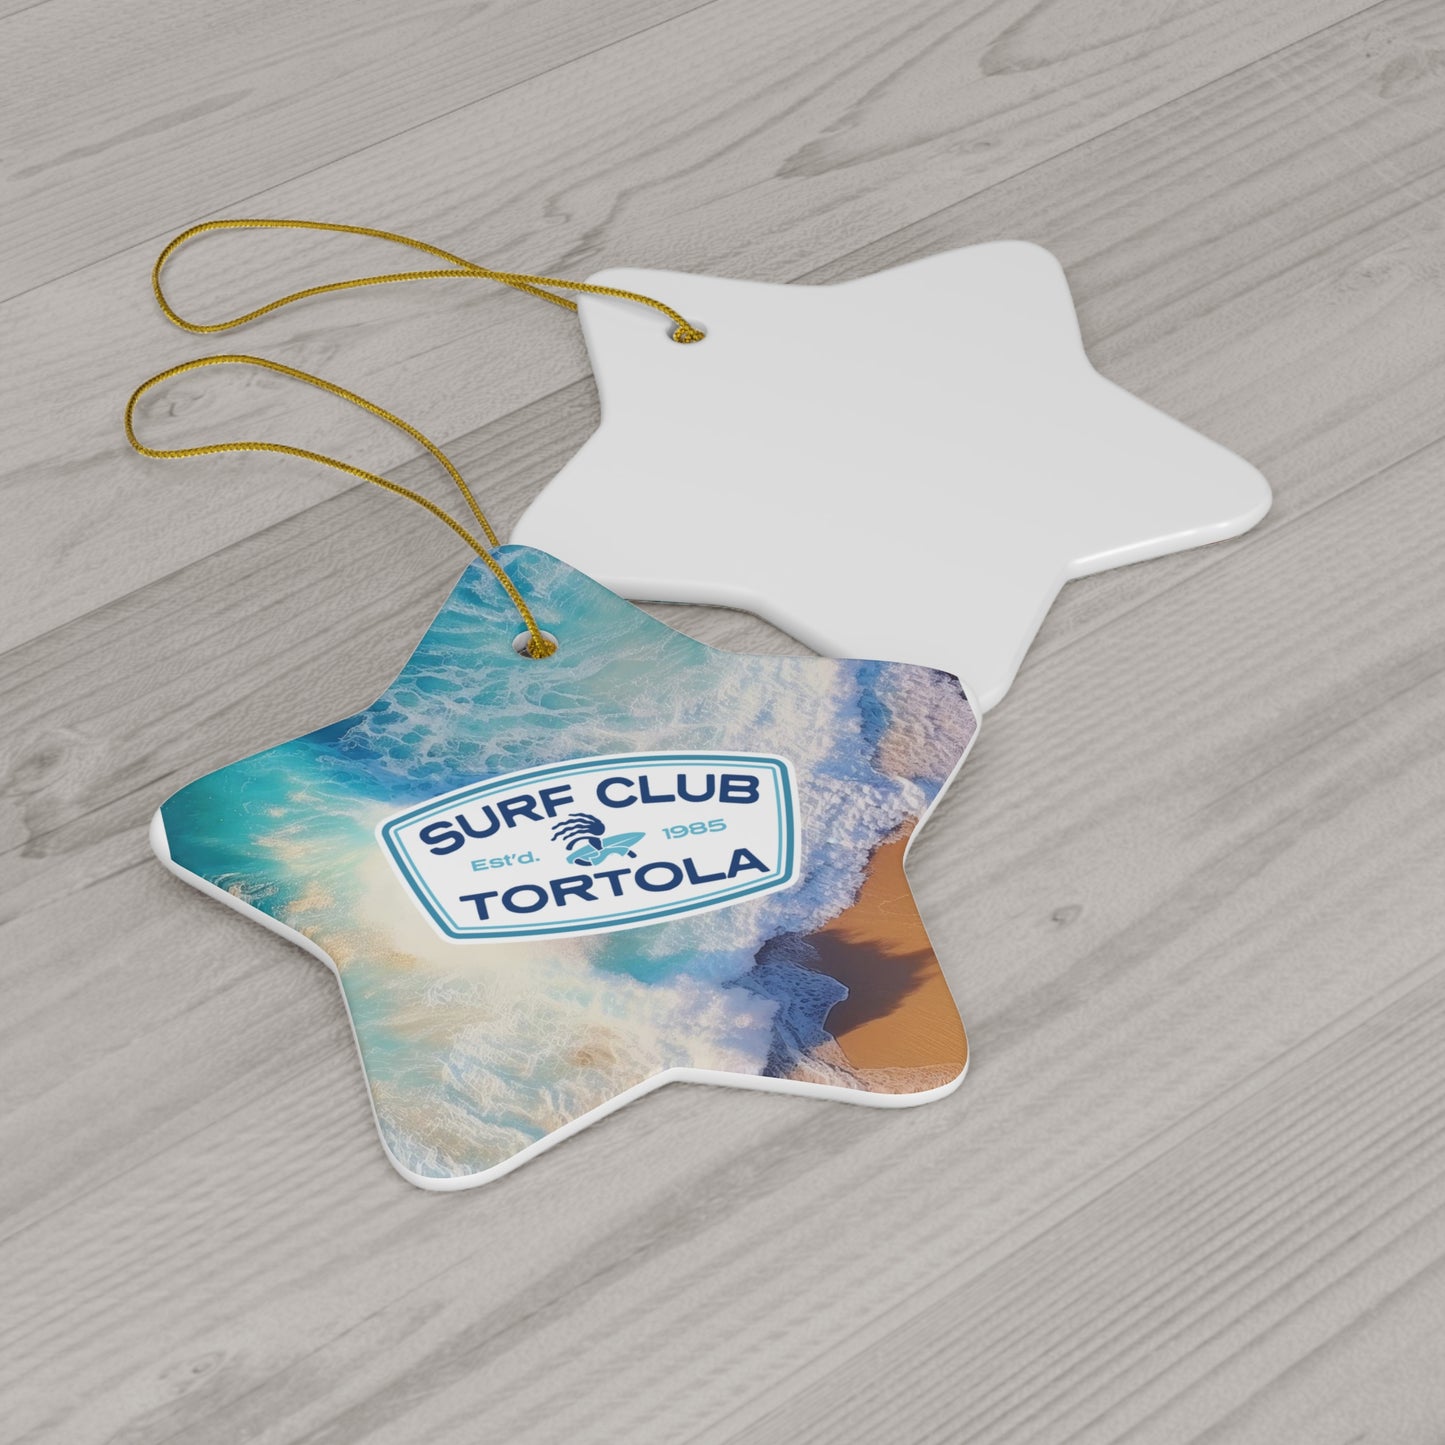 "Surf Club Tortola" Ceramic Ornament, 3 Shapes